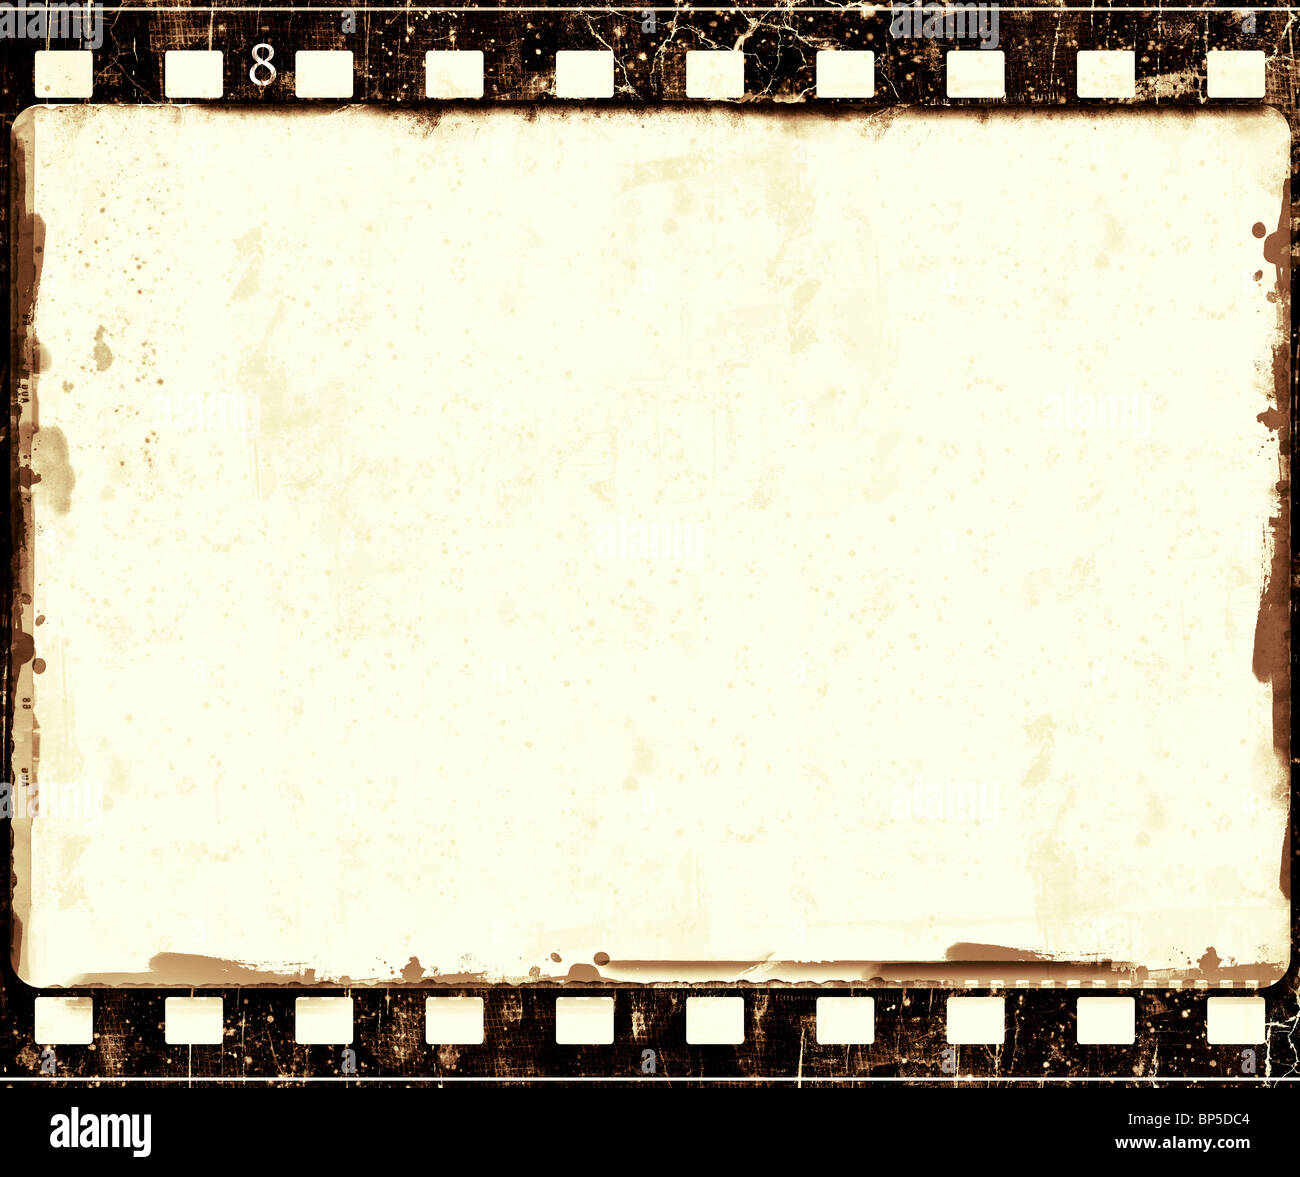 Nostalgic Retro Camera Film and Slides Photo Photograph Cool Wall